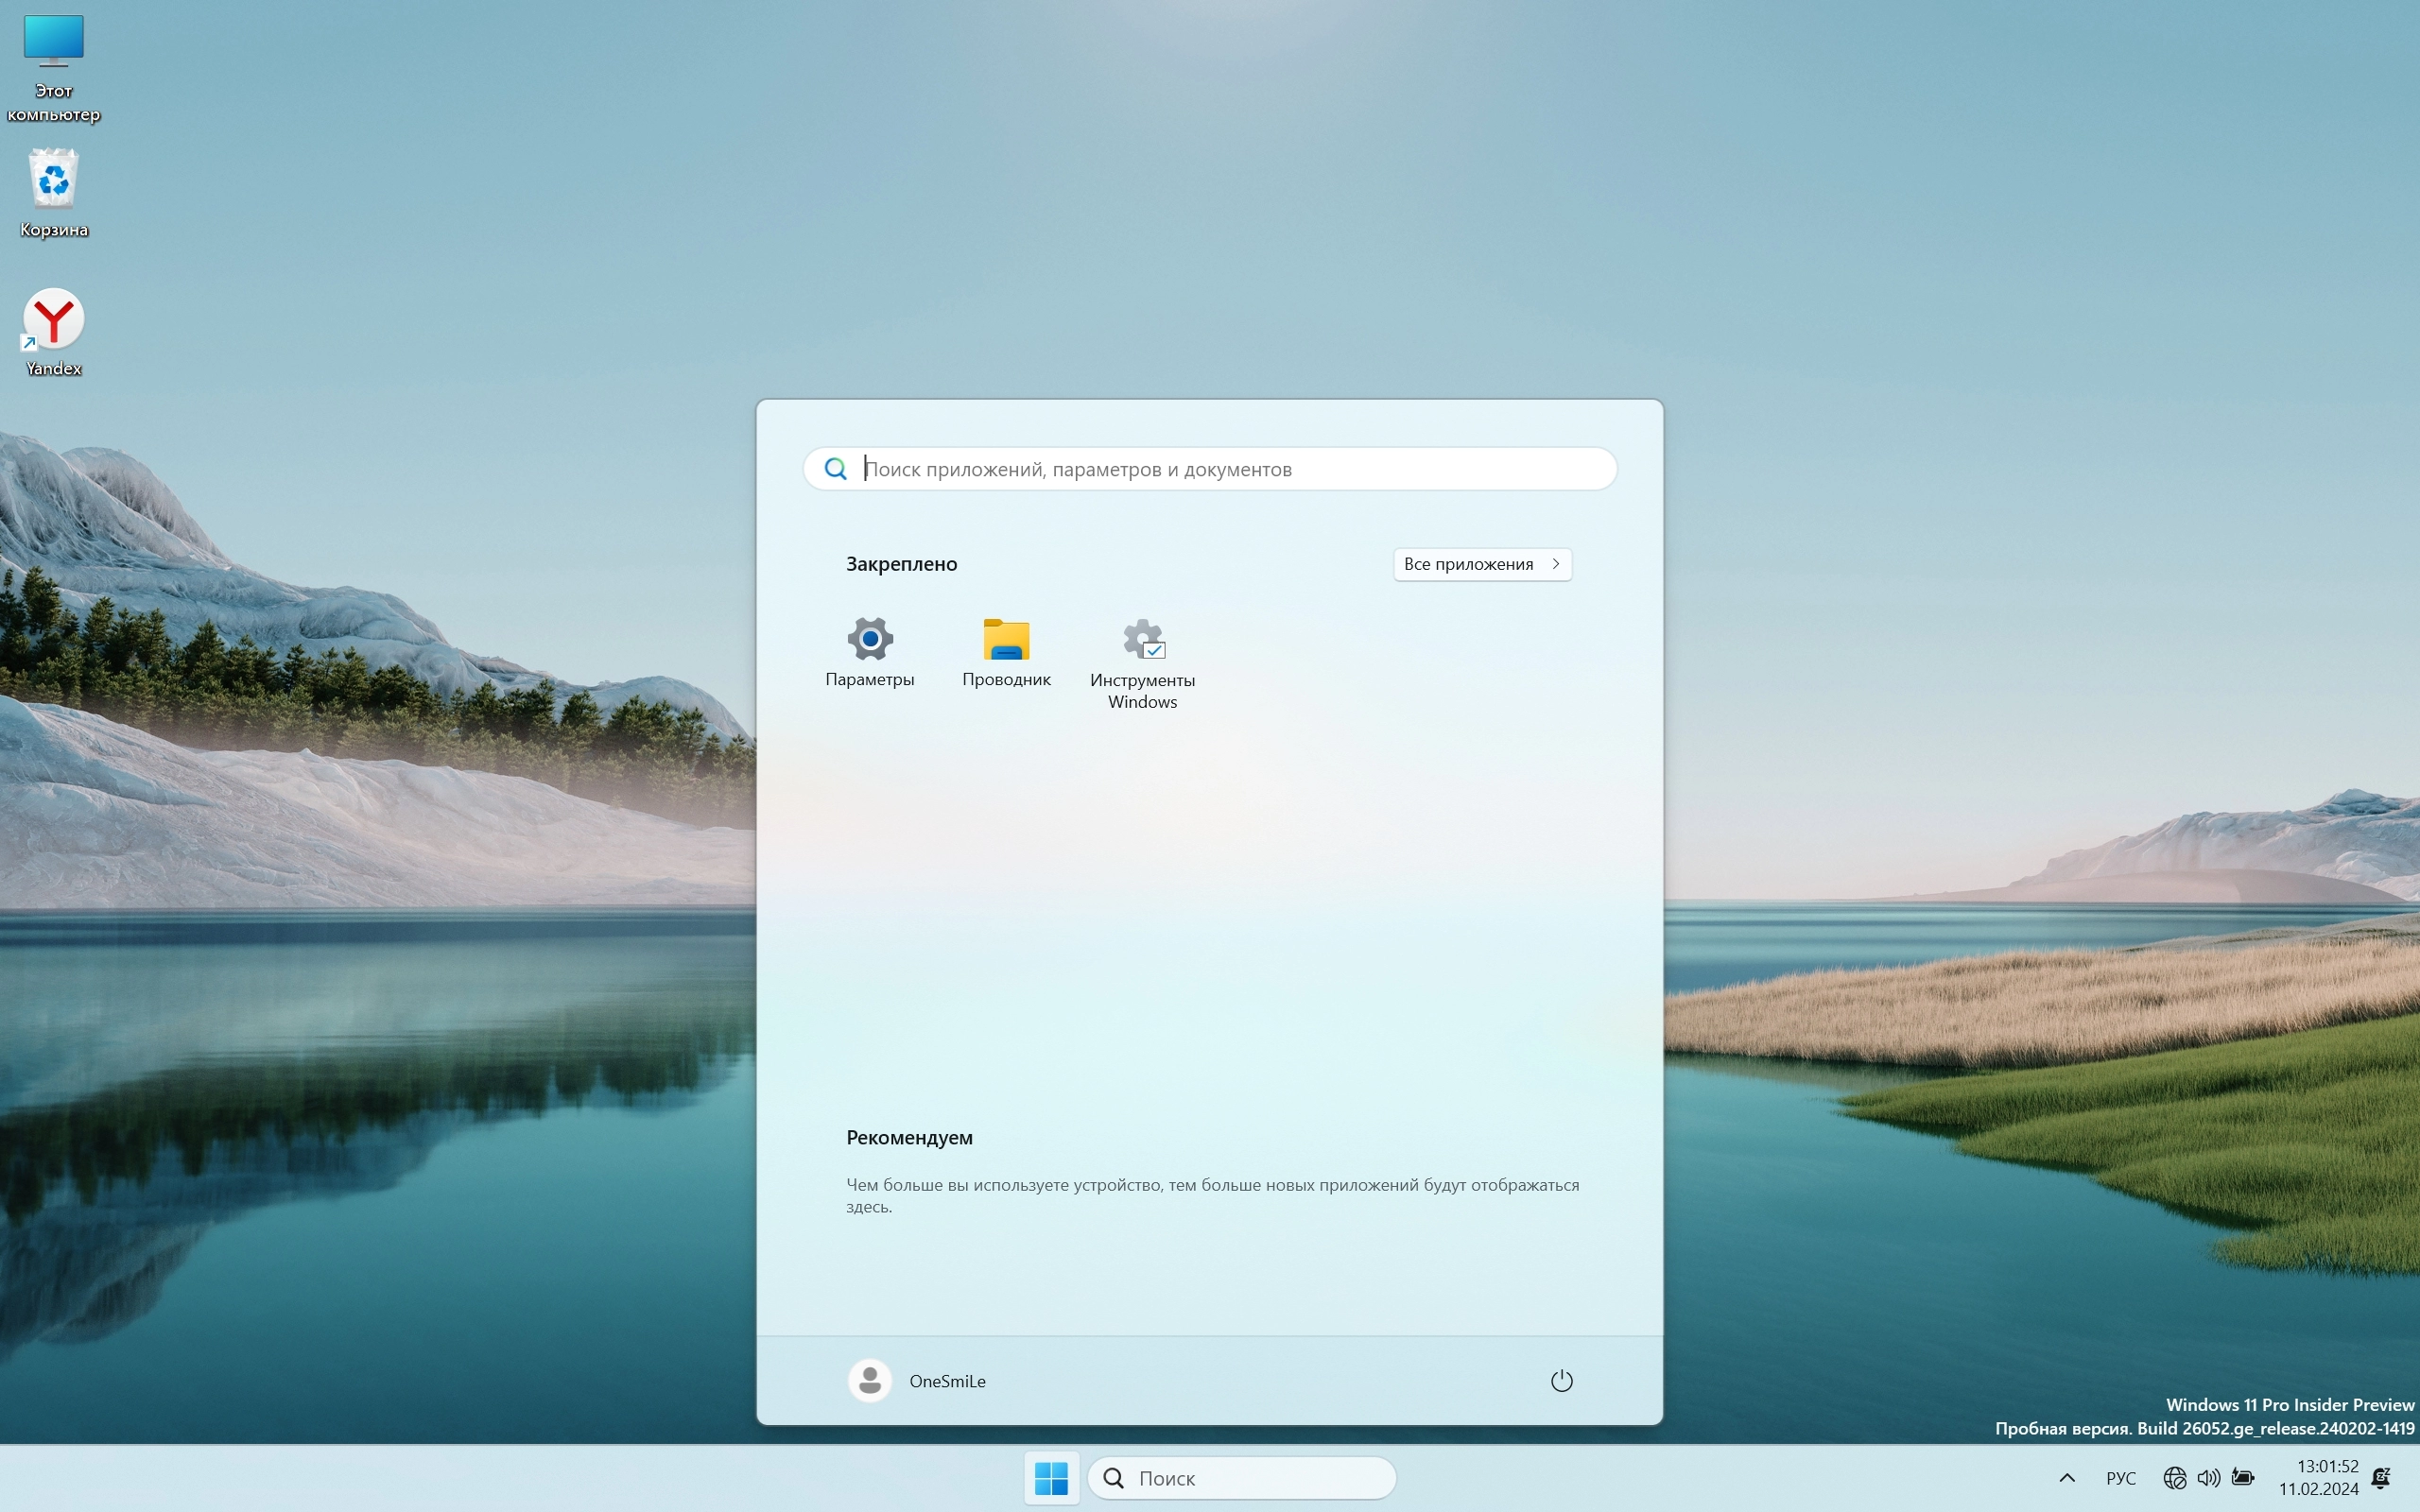 Windows 11 24H2 x64 Русская by OneSmiLe [26052.1100]